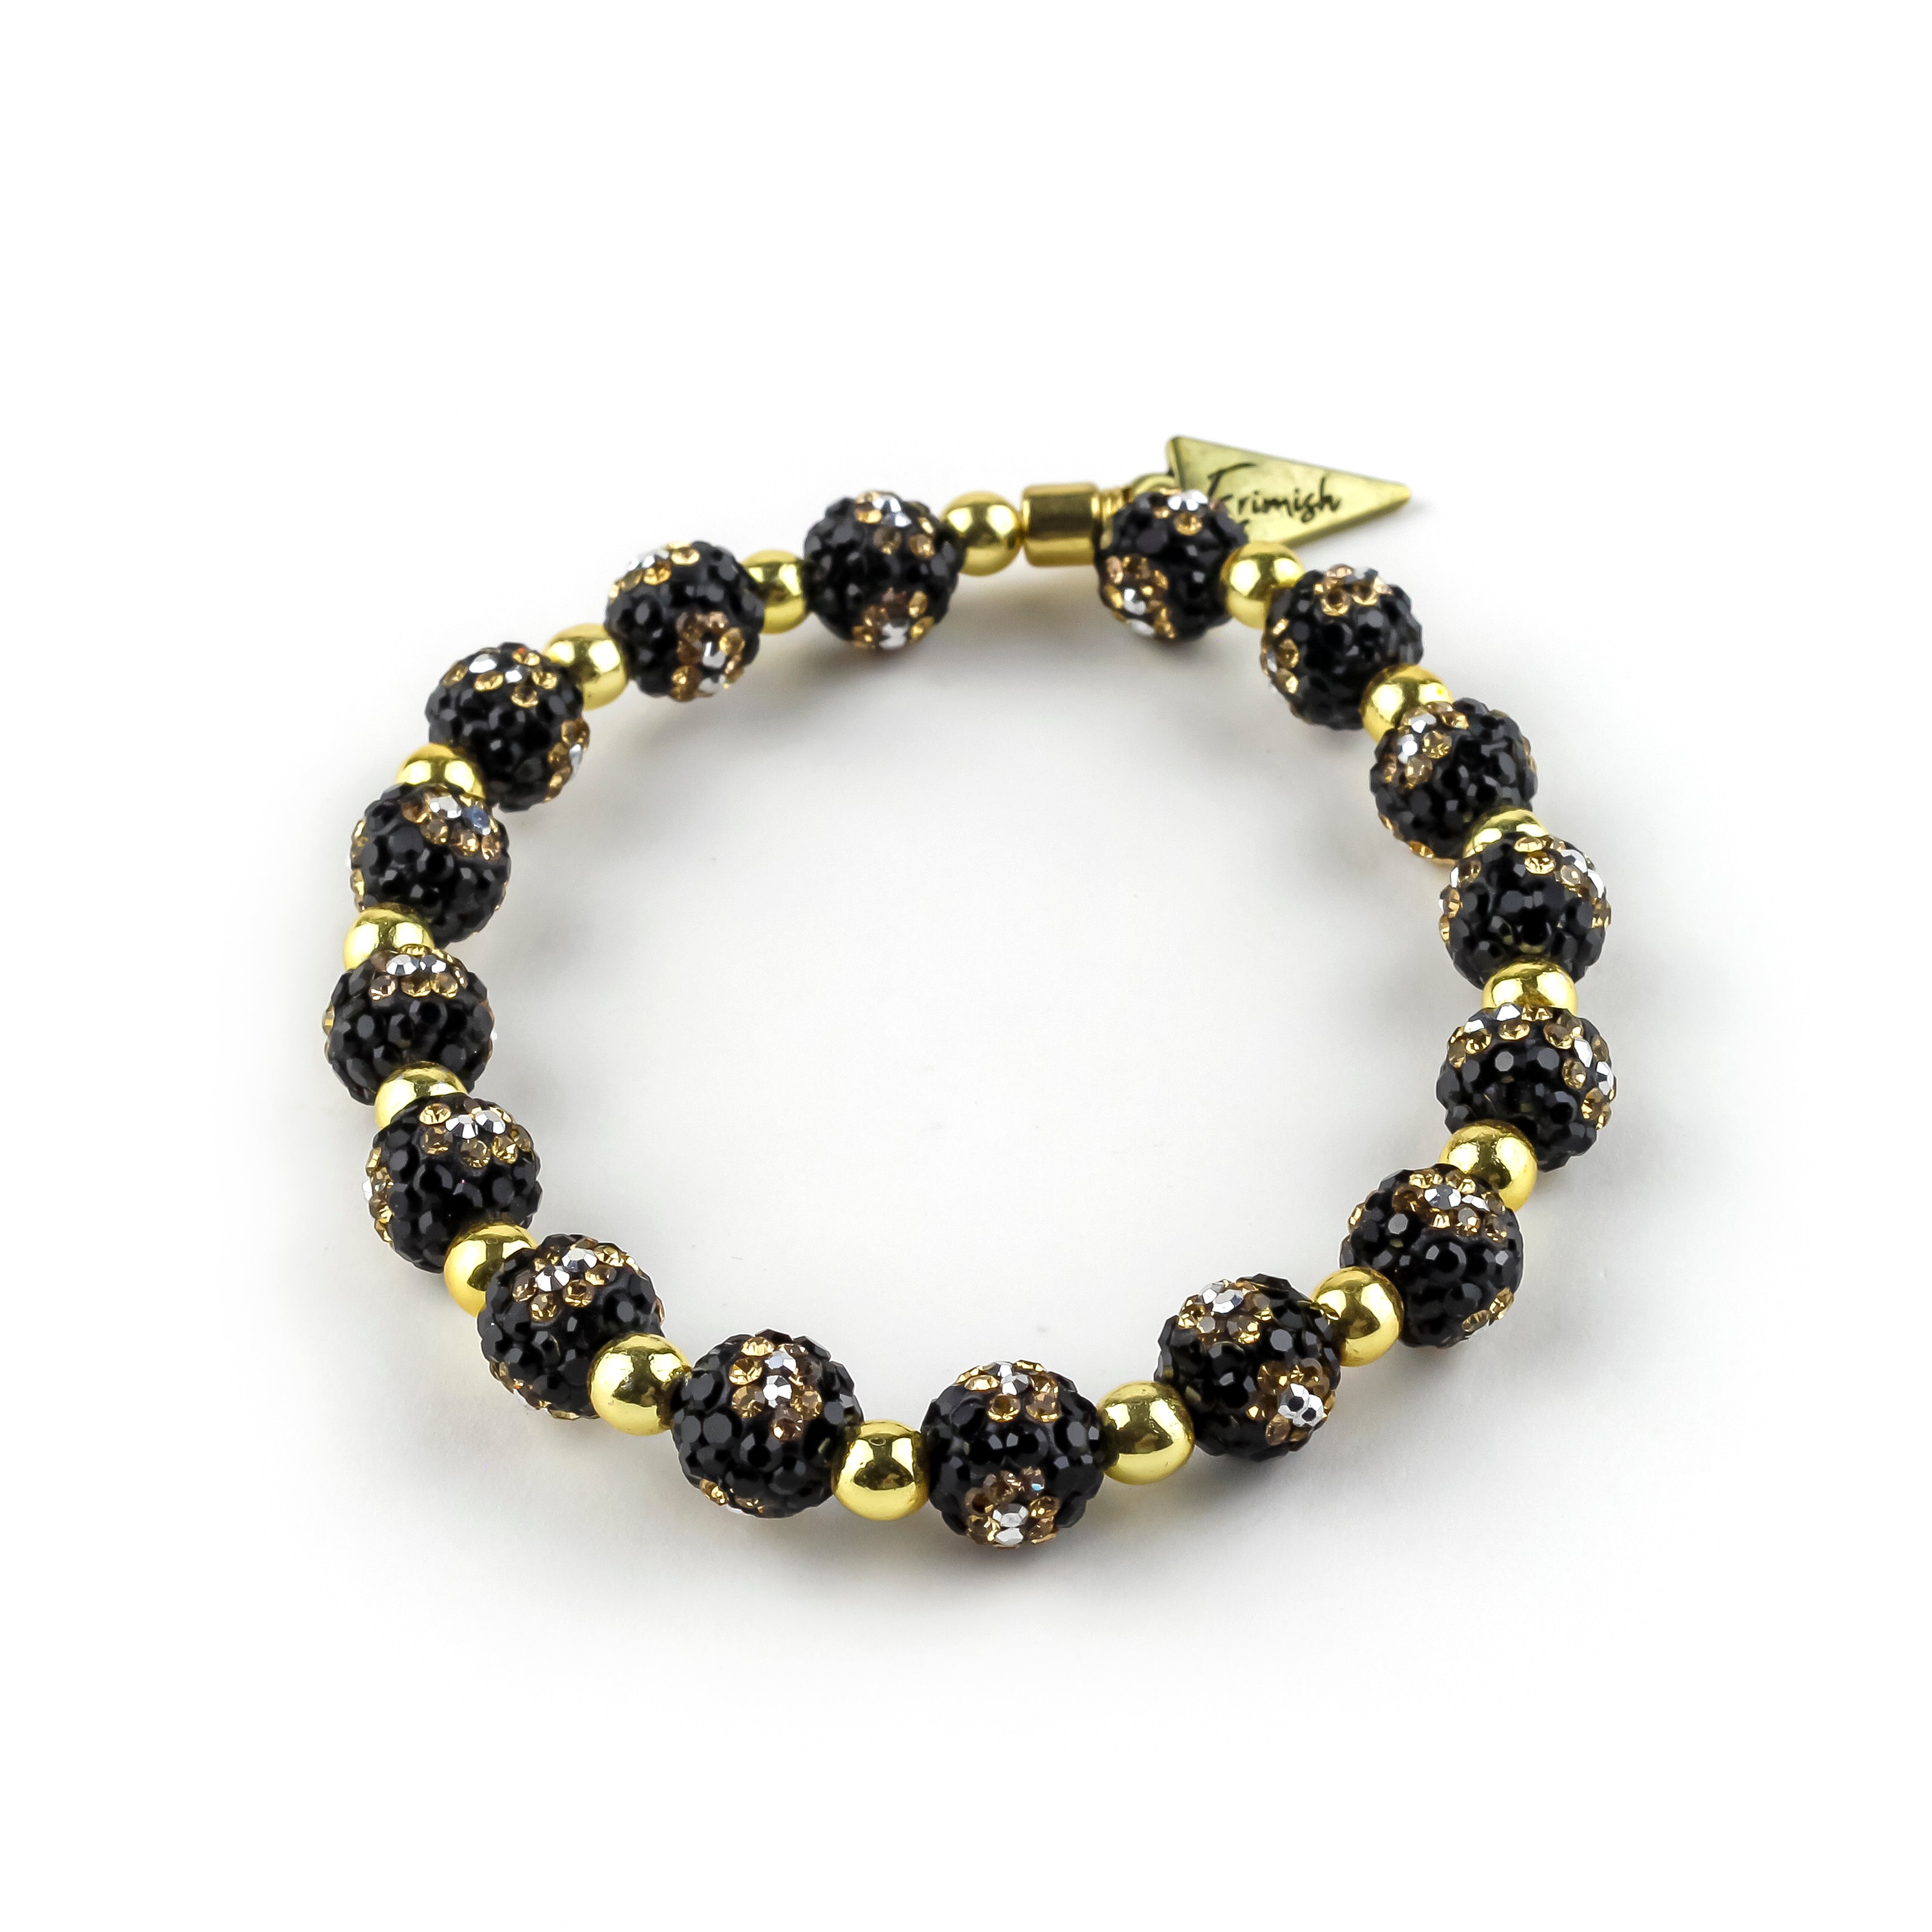 Shamballa Bracelet, handmade hematite beads, adjustable macrame, new colors  | eBay